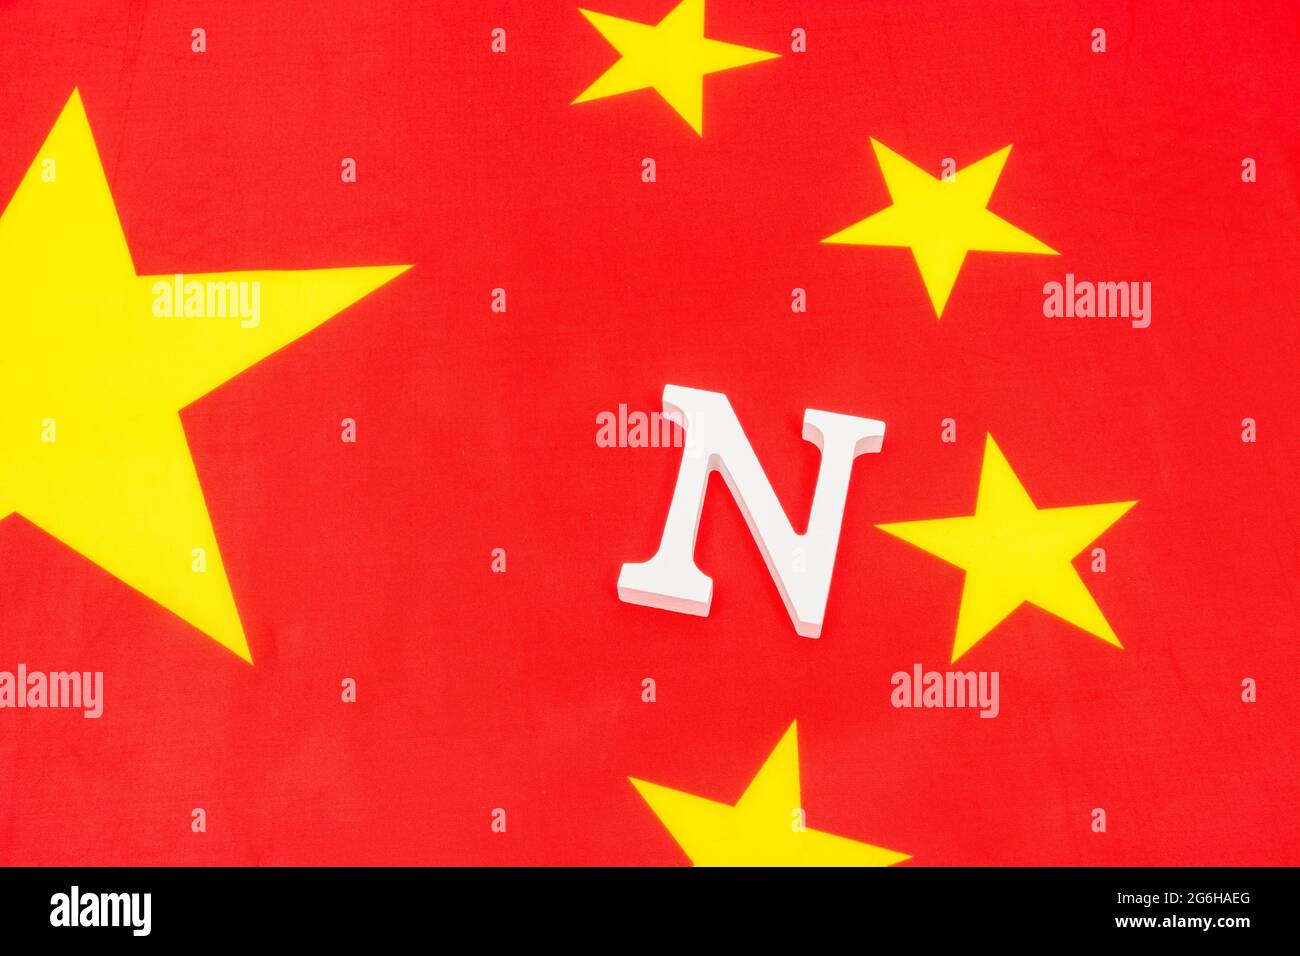 Fabric China flag + 'N' & yellow star forming 'No'. For Australia & India China boycott & sanctions, China human rights, Philippines' China resistance Stock Photo